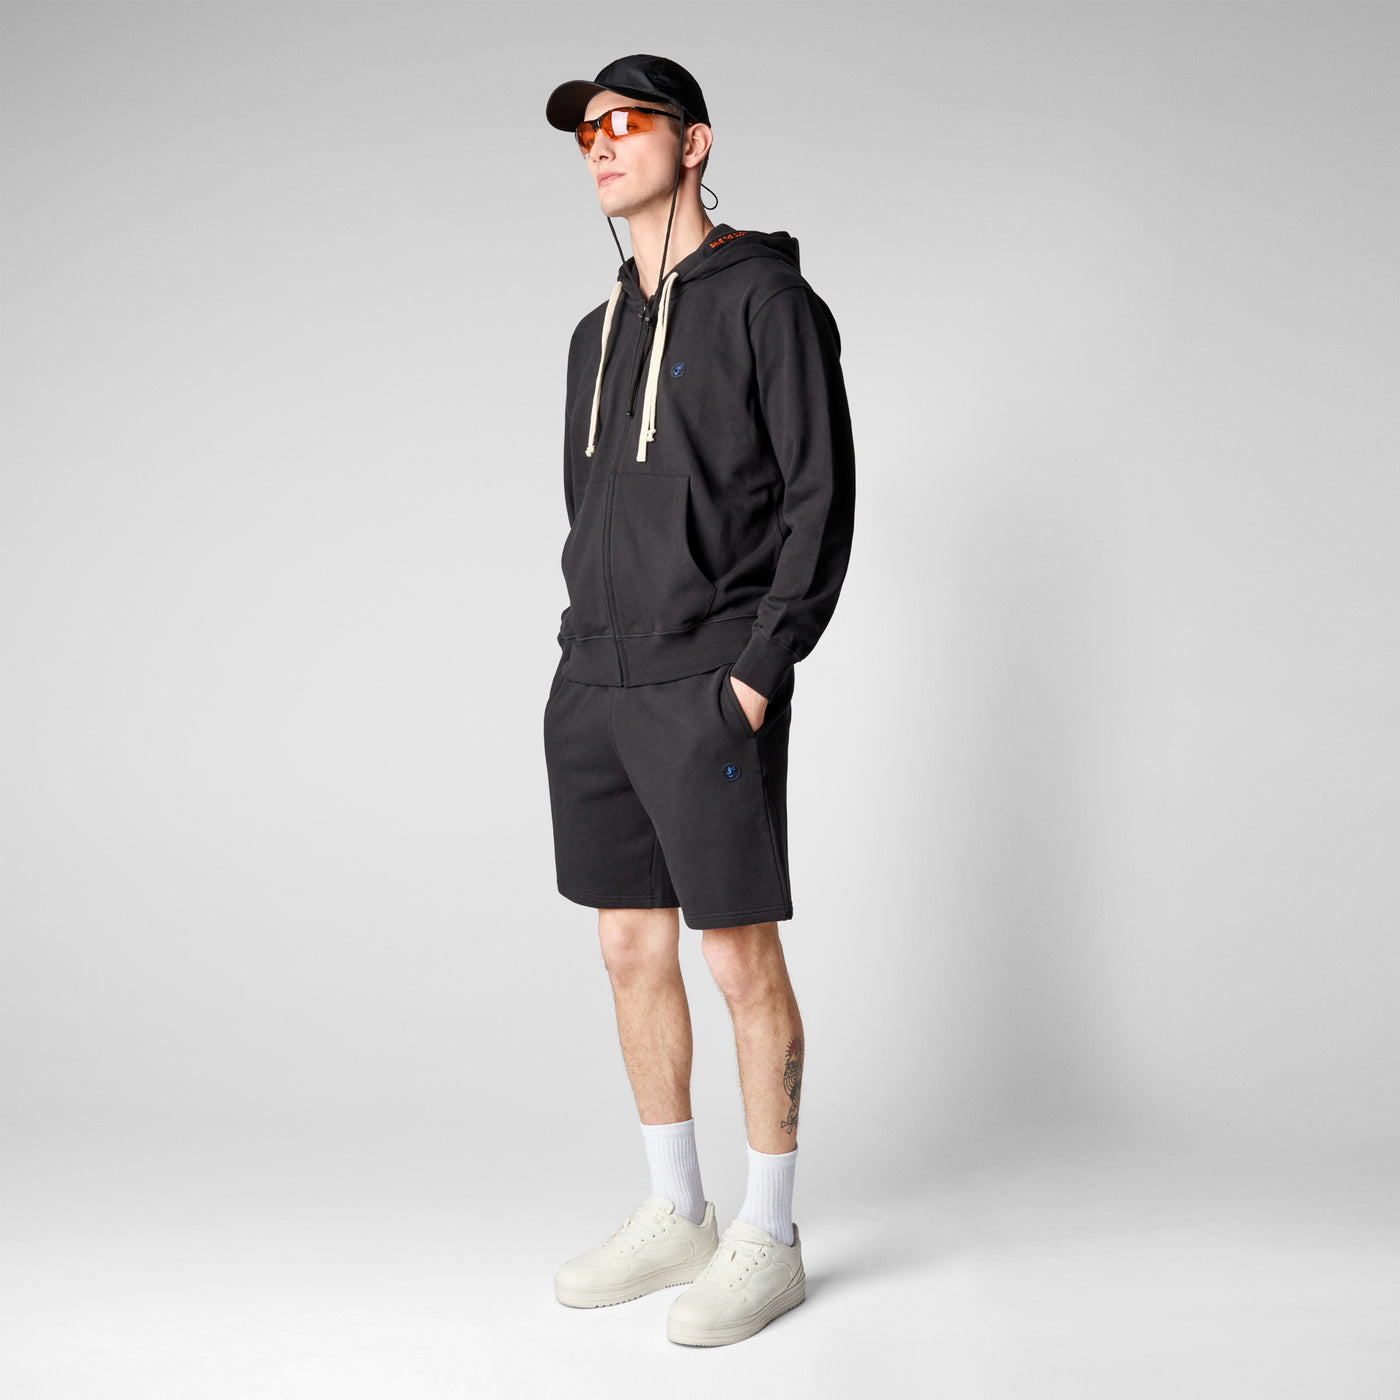 Mode Life-style Image of Men's Rayon Sweatshorts in Black